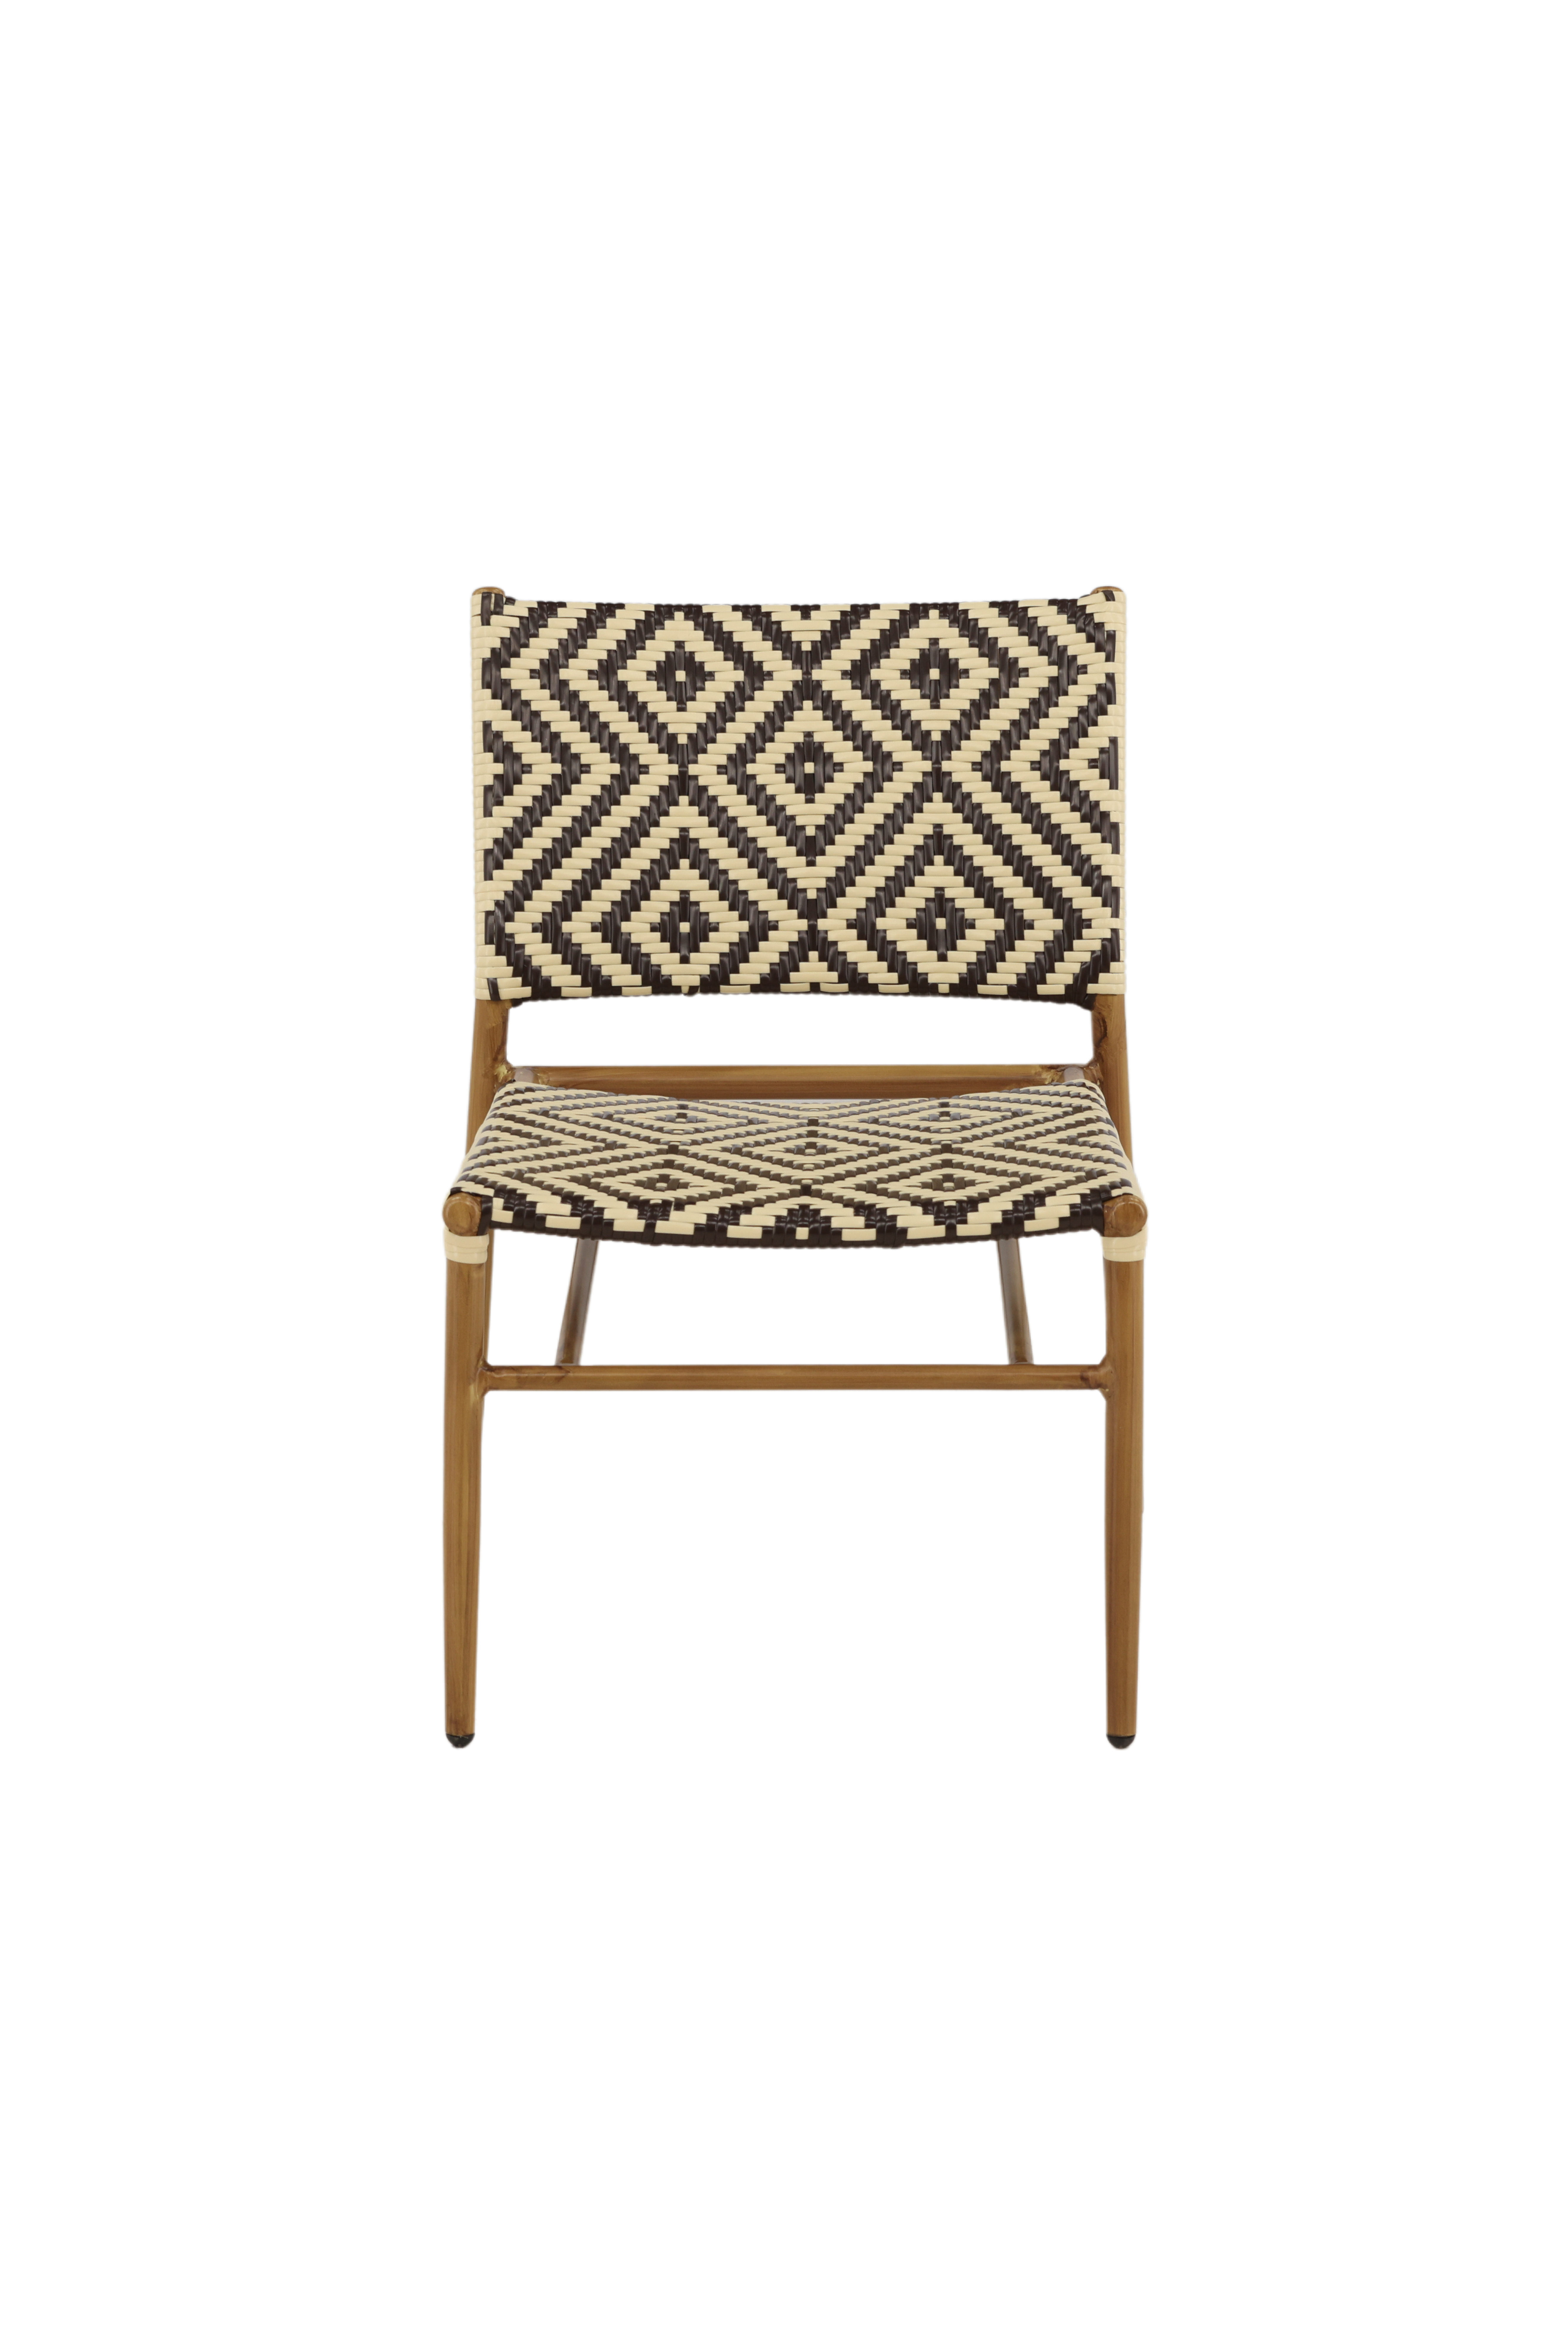 10: VENTURE DESIGN Calapan udendørs loungestol - beige/brun polyrattan og natur aluminium